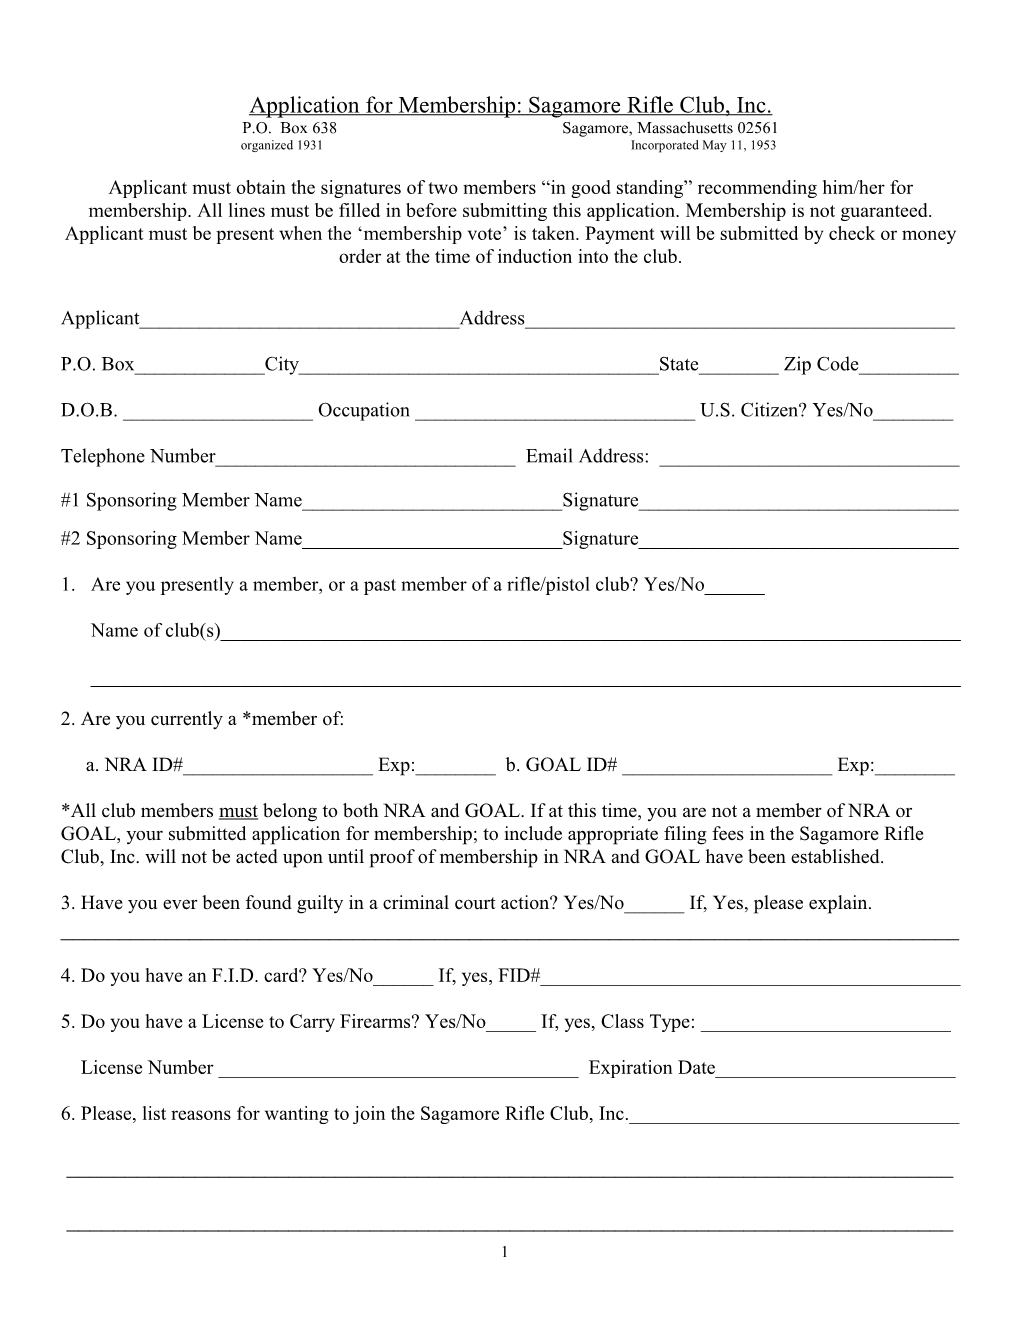 Application for Membership: Sagamore Rifle Club, Inc